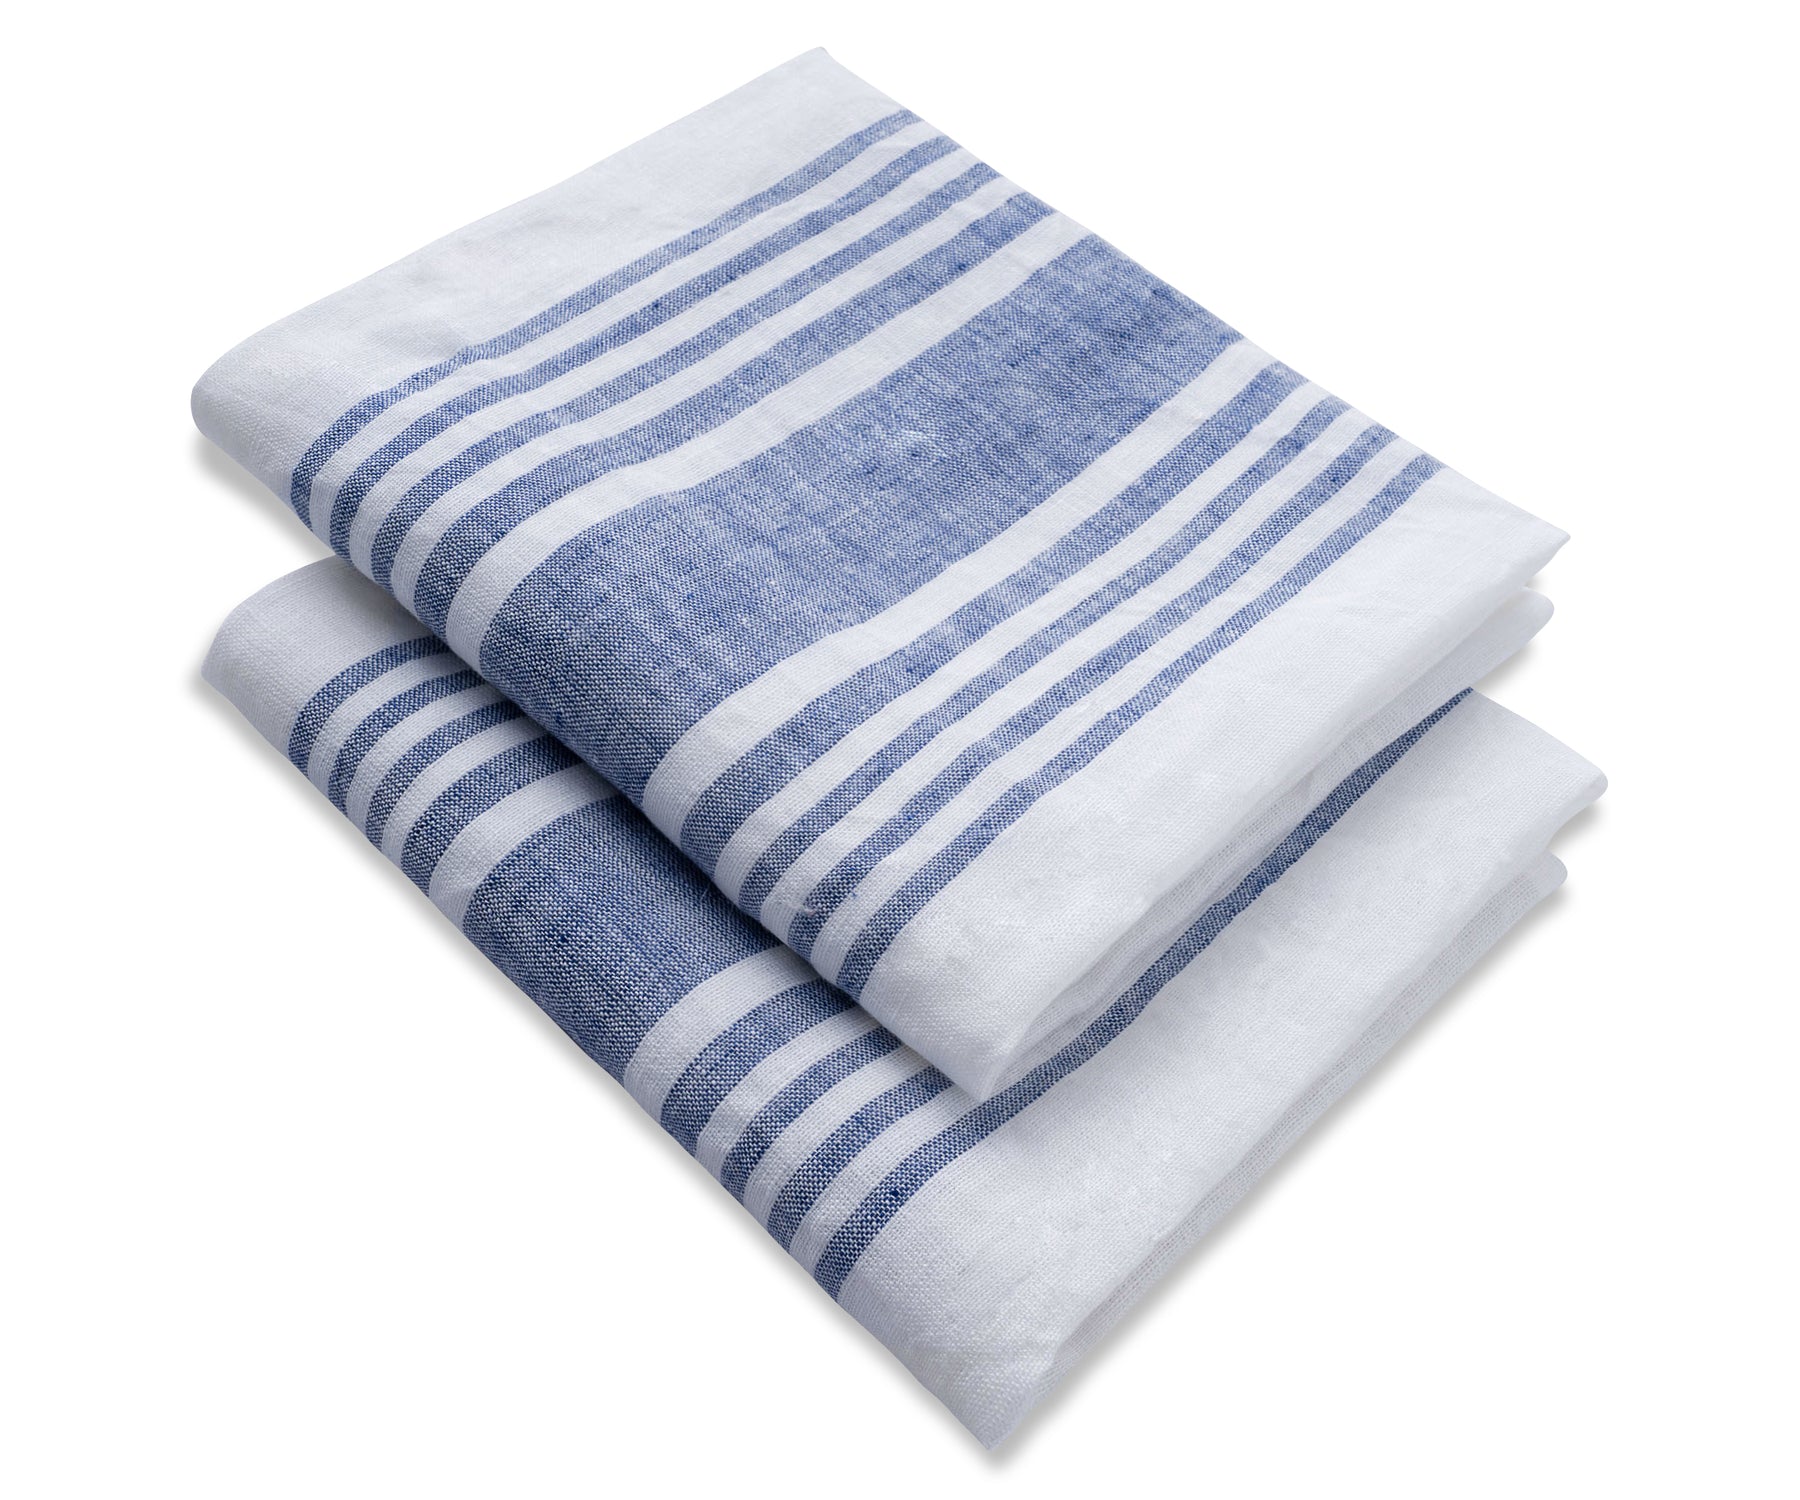 White Waffle Weave Guest Towel with Aqua Blue Linen Border